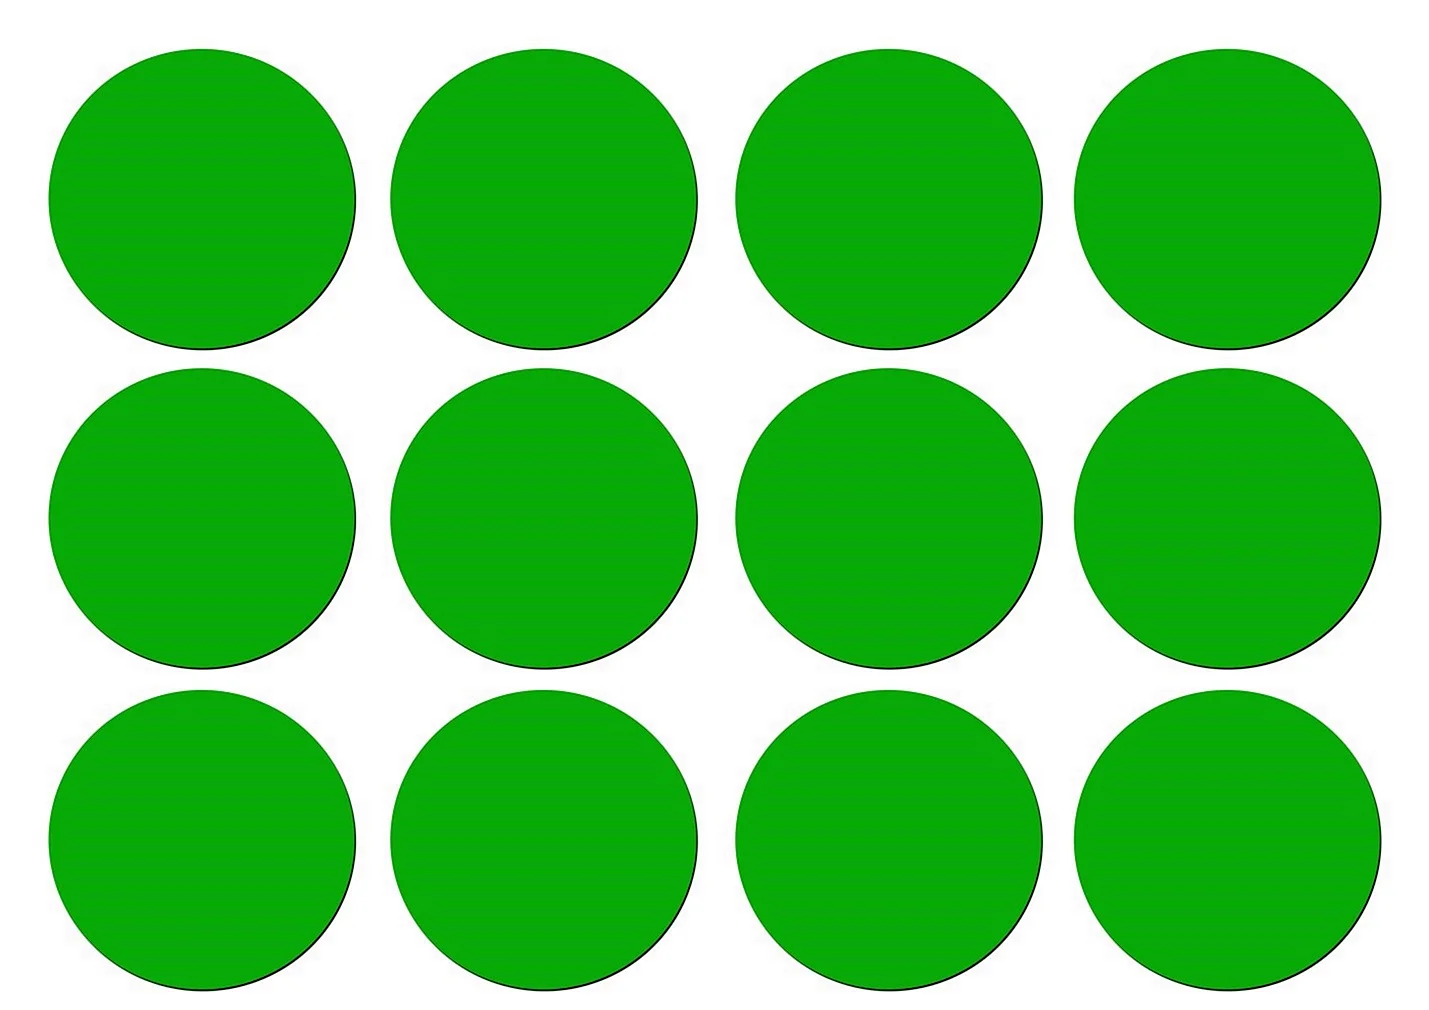 Зеленый круг